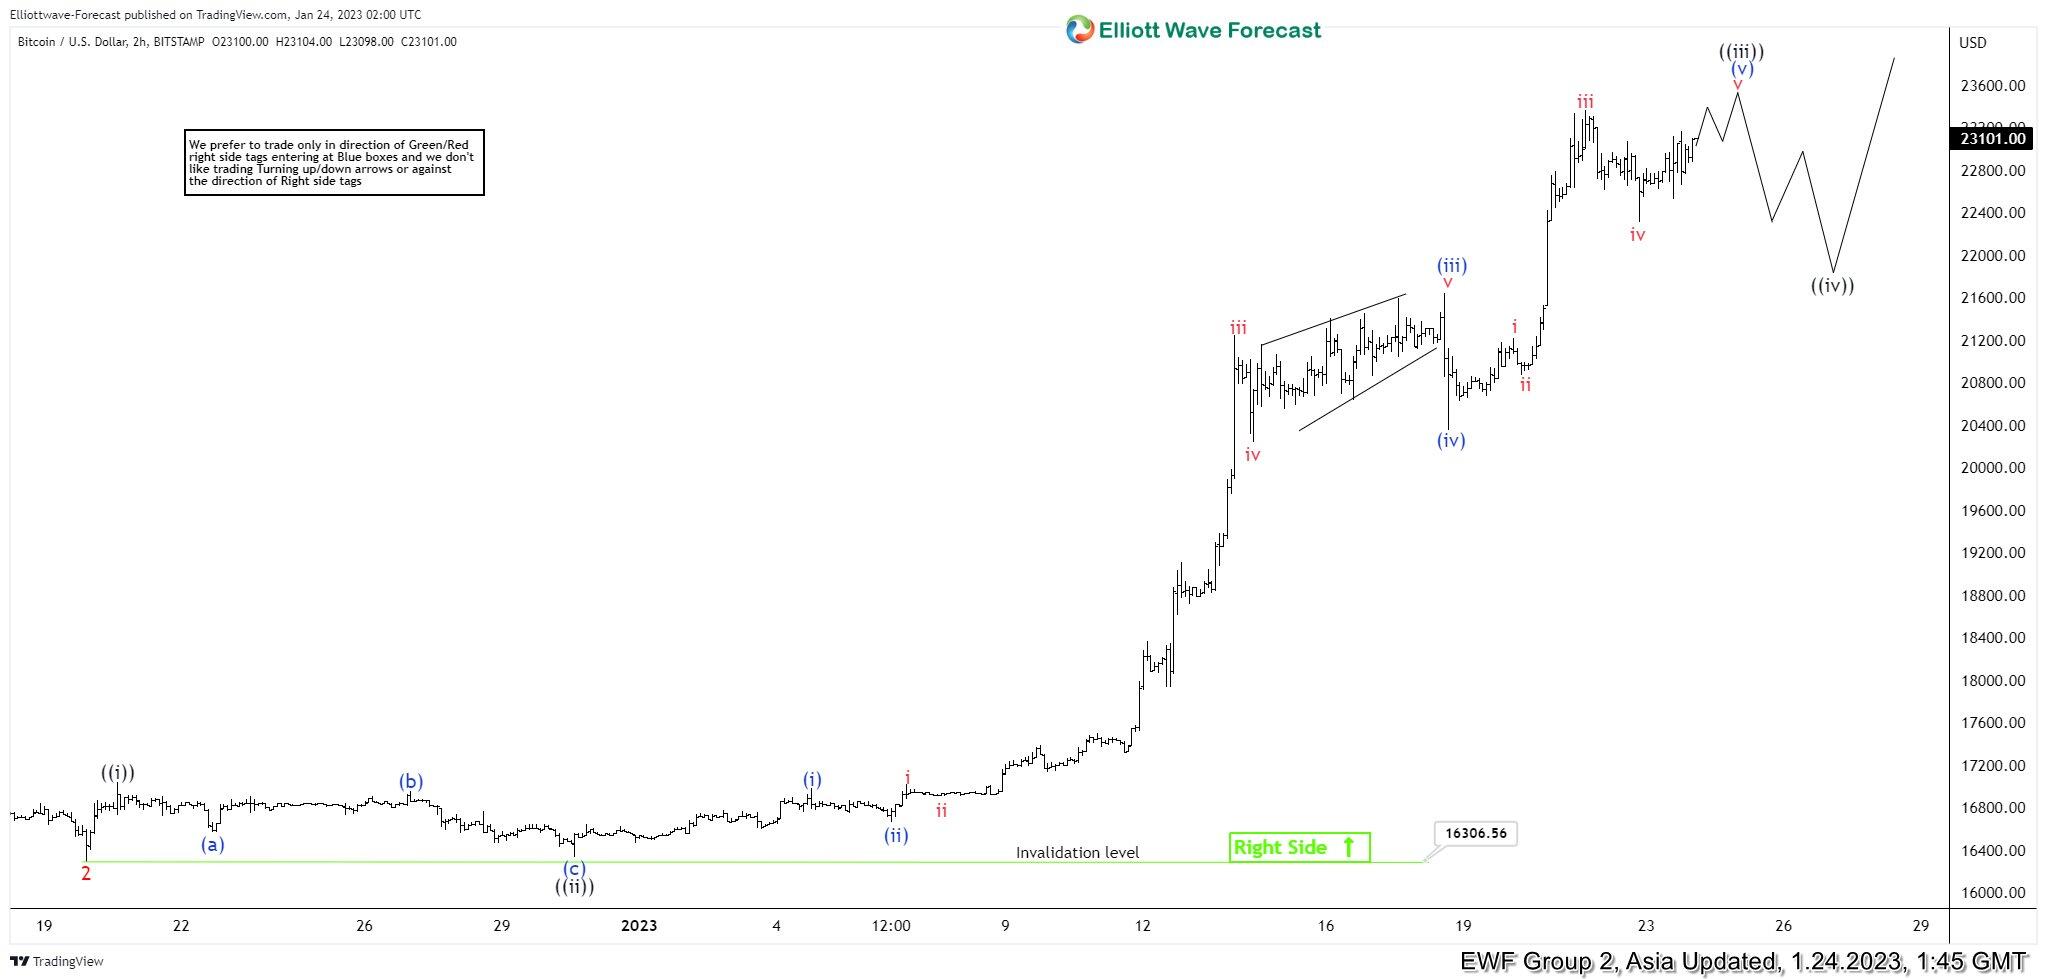 Forecasting Elliott Wave ((iv)) correction in Bitcoin